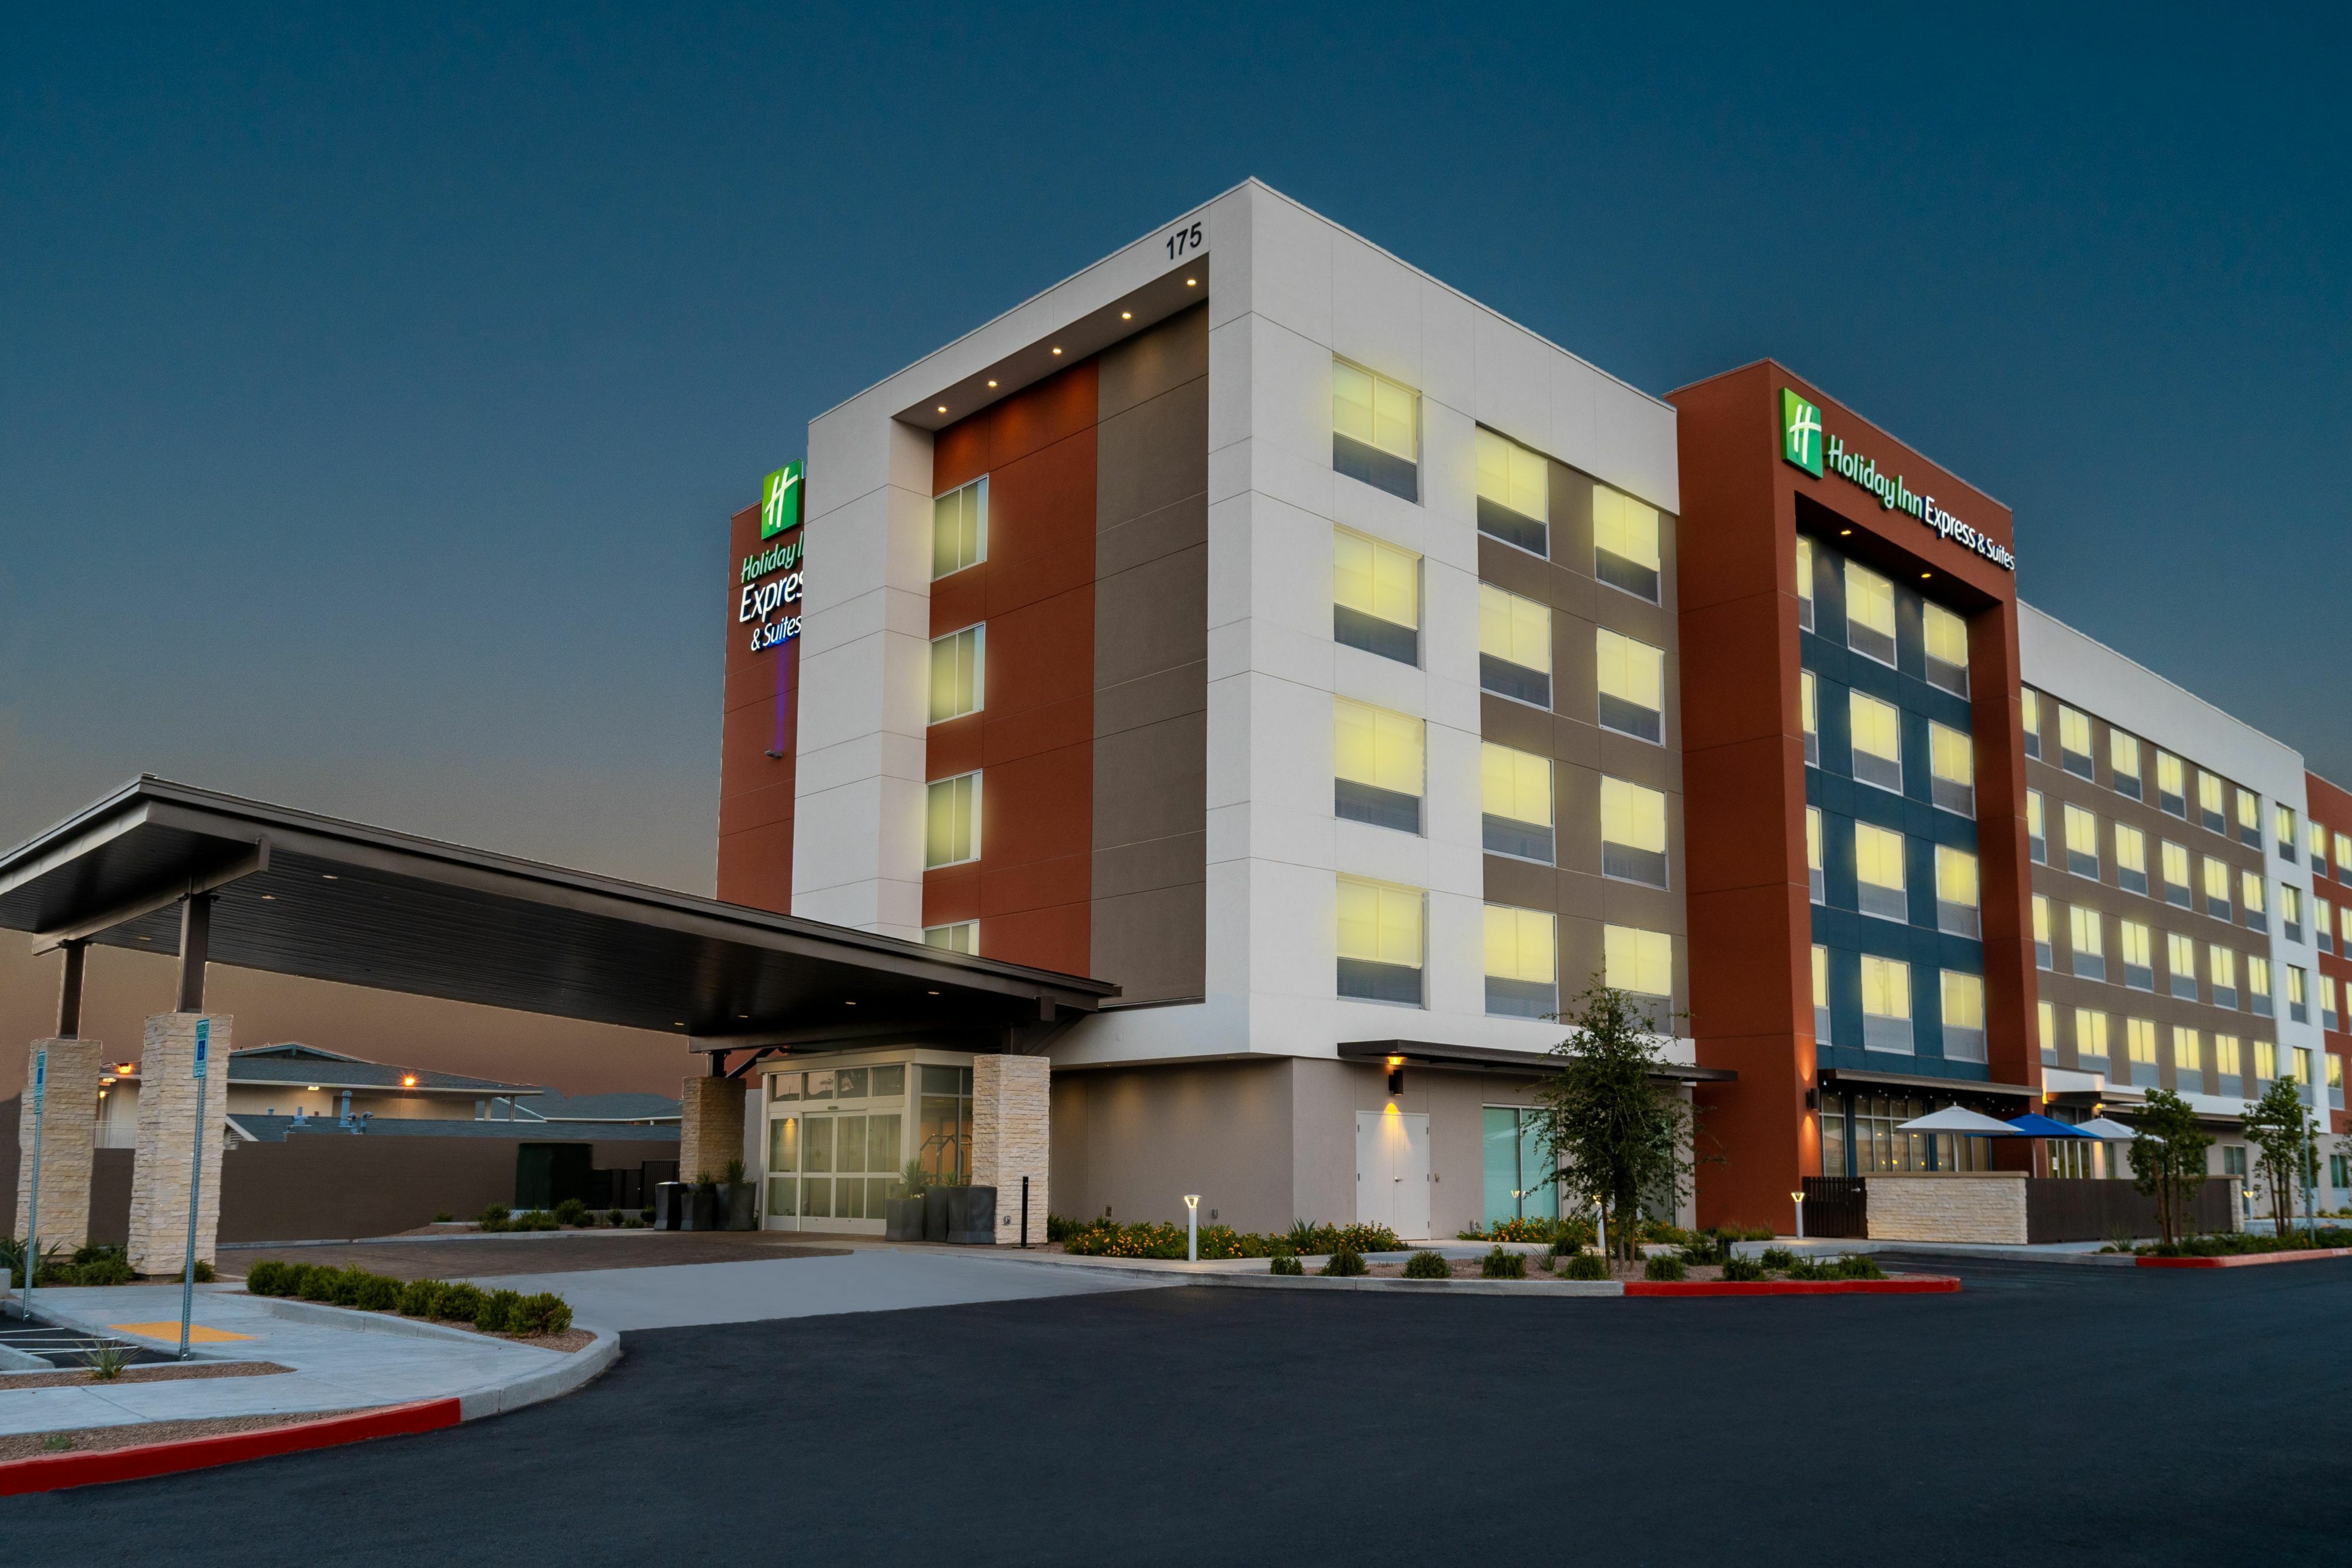 Photo of Holiday Inn Express & Suites Las Vegas - E Tropicana, Las Vegas, NV